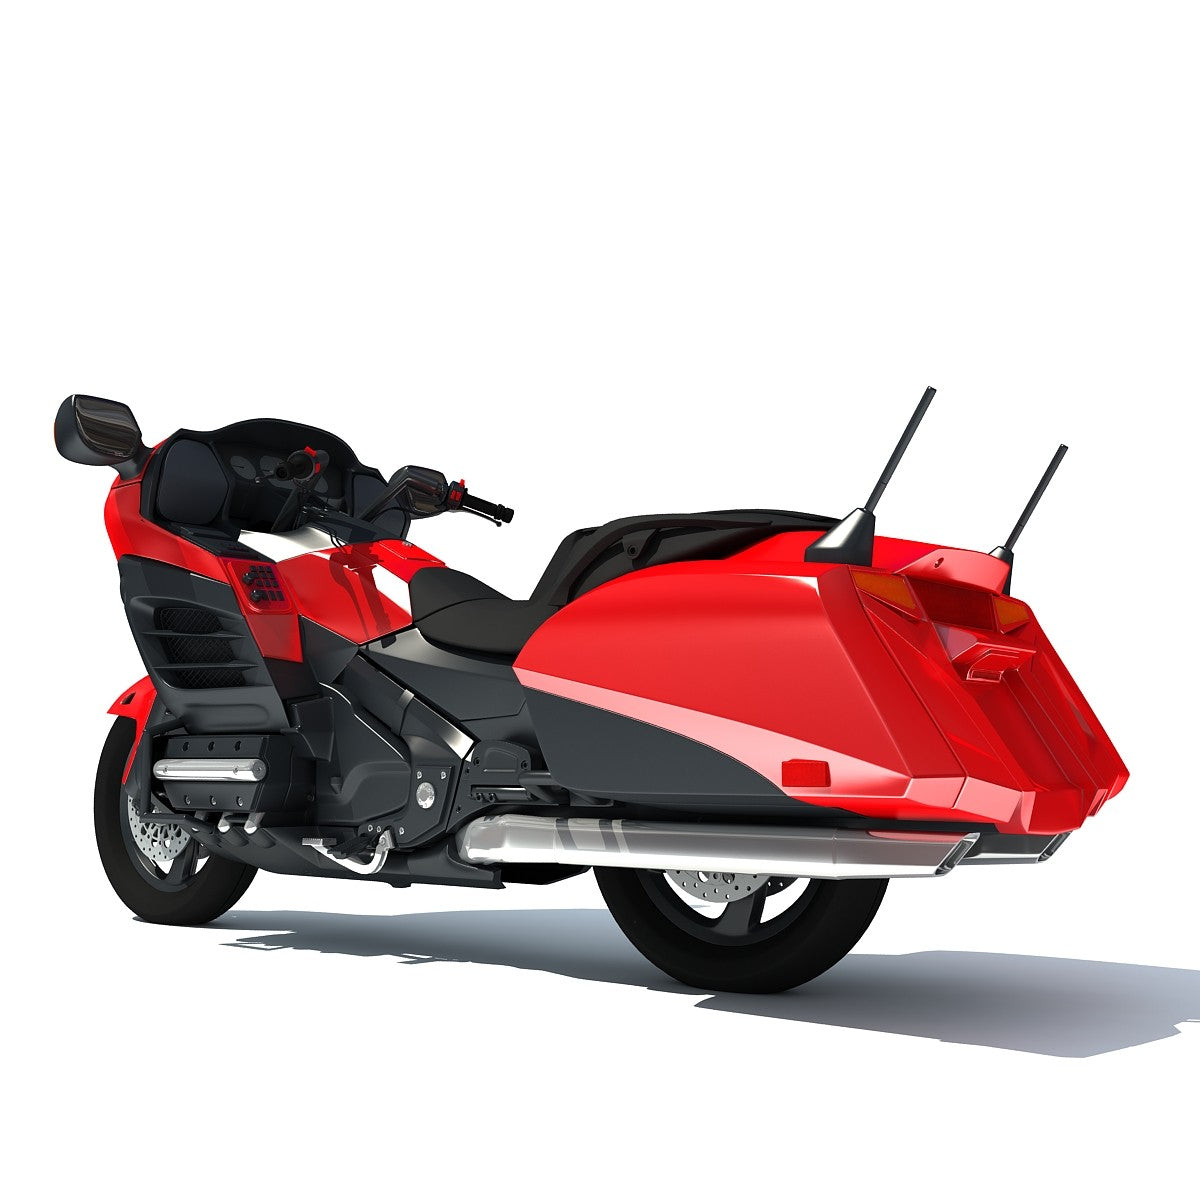 Honda Goldwing Motorcycle 3D Model